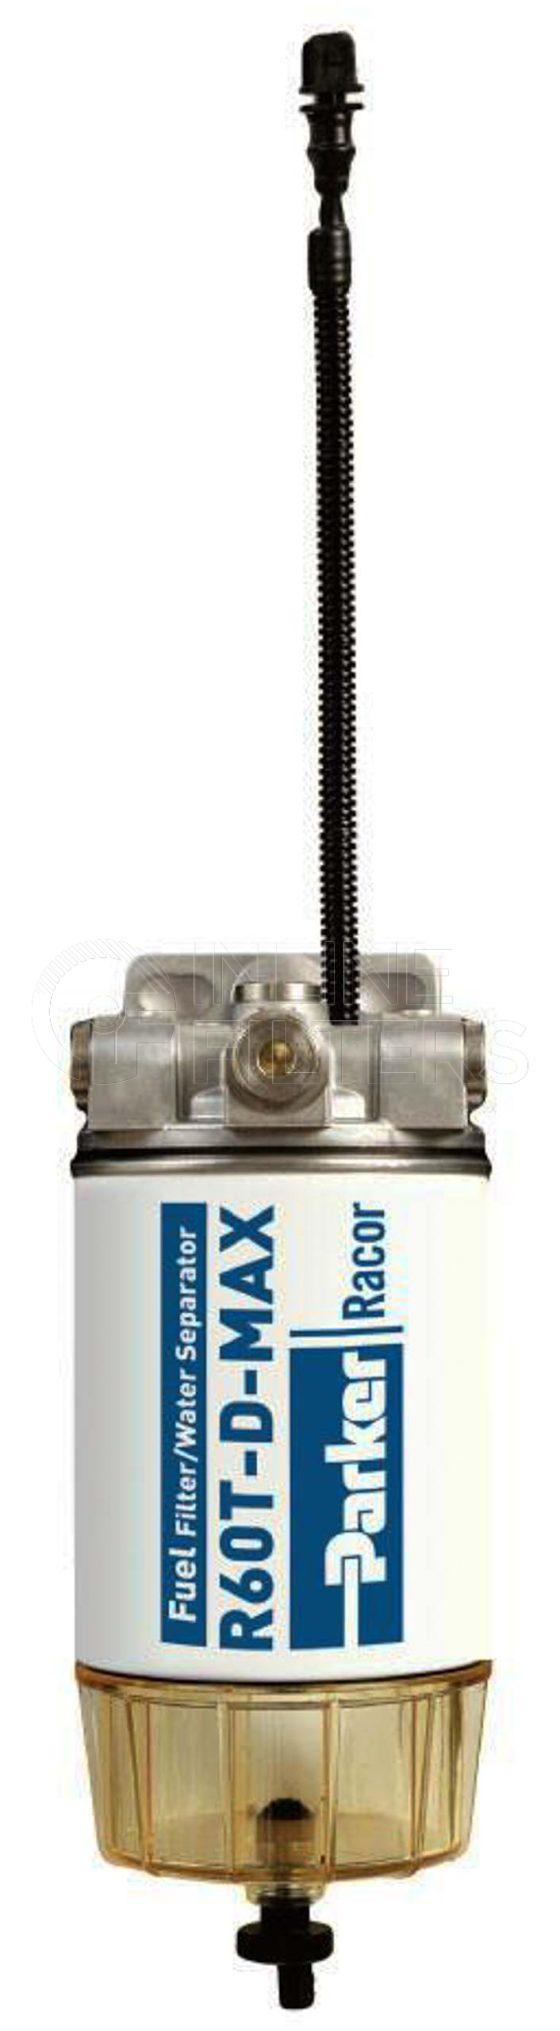 Racor 490RHH10MTC. Fuel Filter Water Separator - Racor Spin-on Series - 490RHH10MTC.